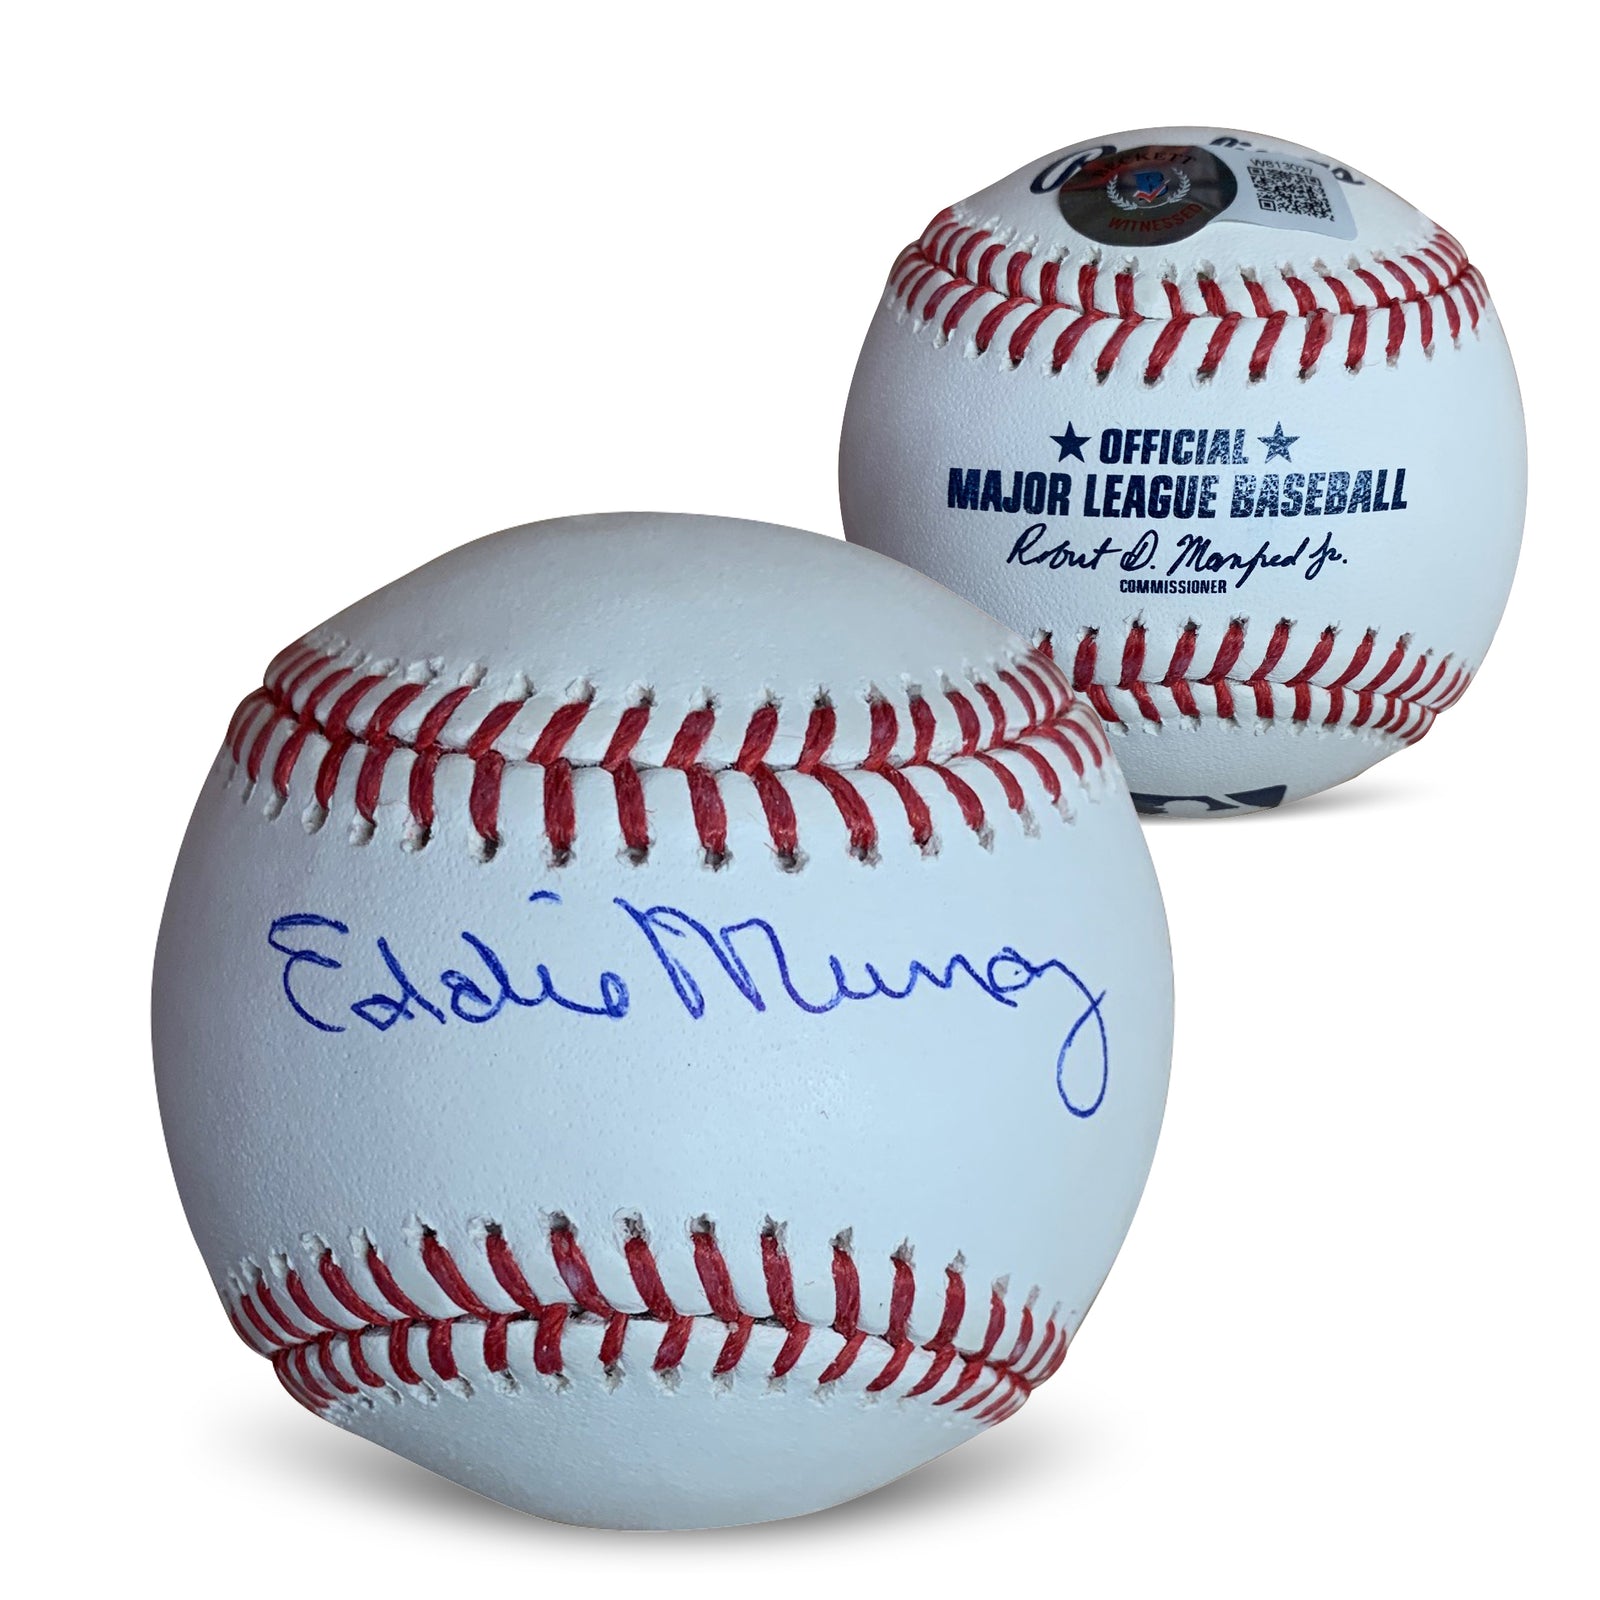 Eddie Murray Autographed Sports Memorabilia Baseball Collectibles